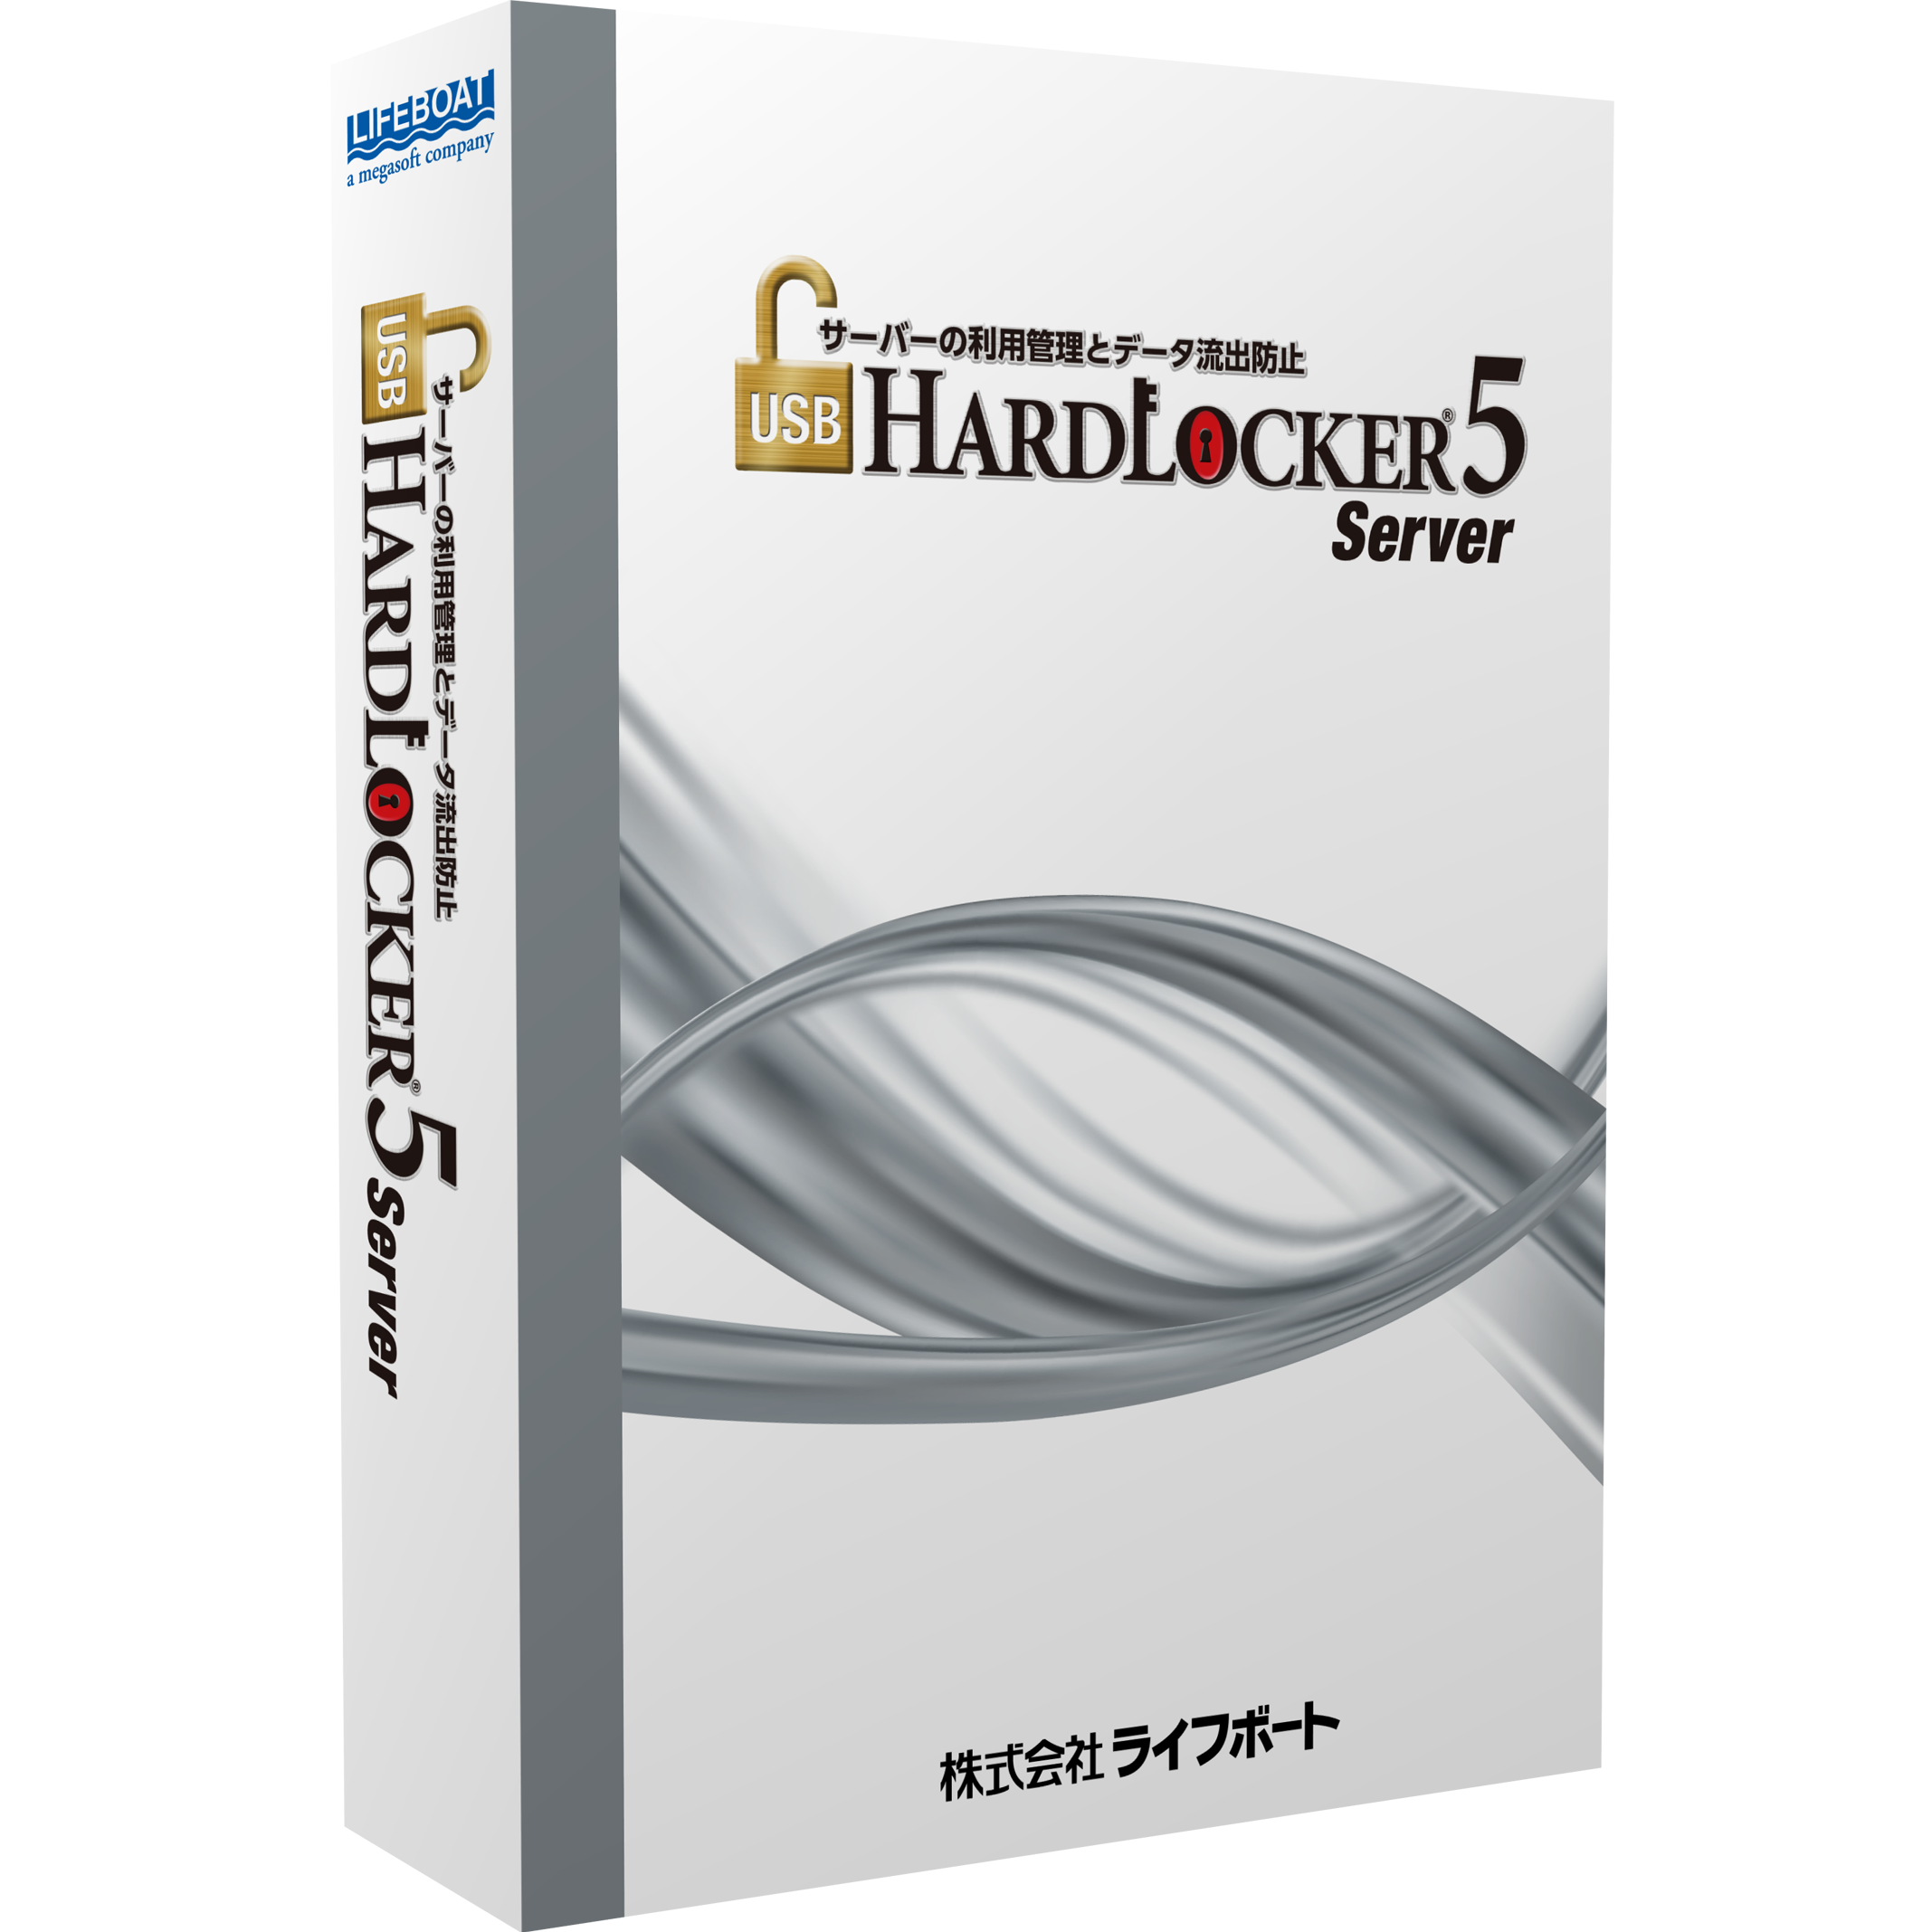 USB HardLocker 5 Server パッケージ版